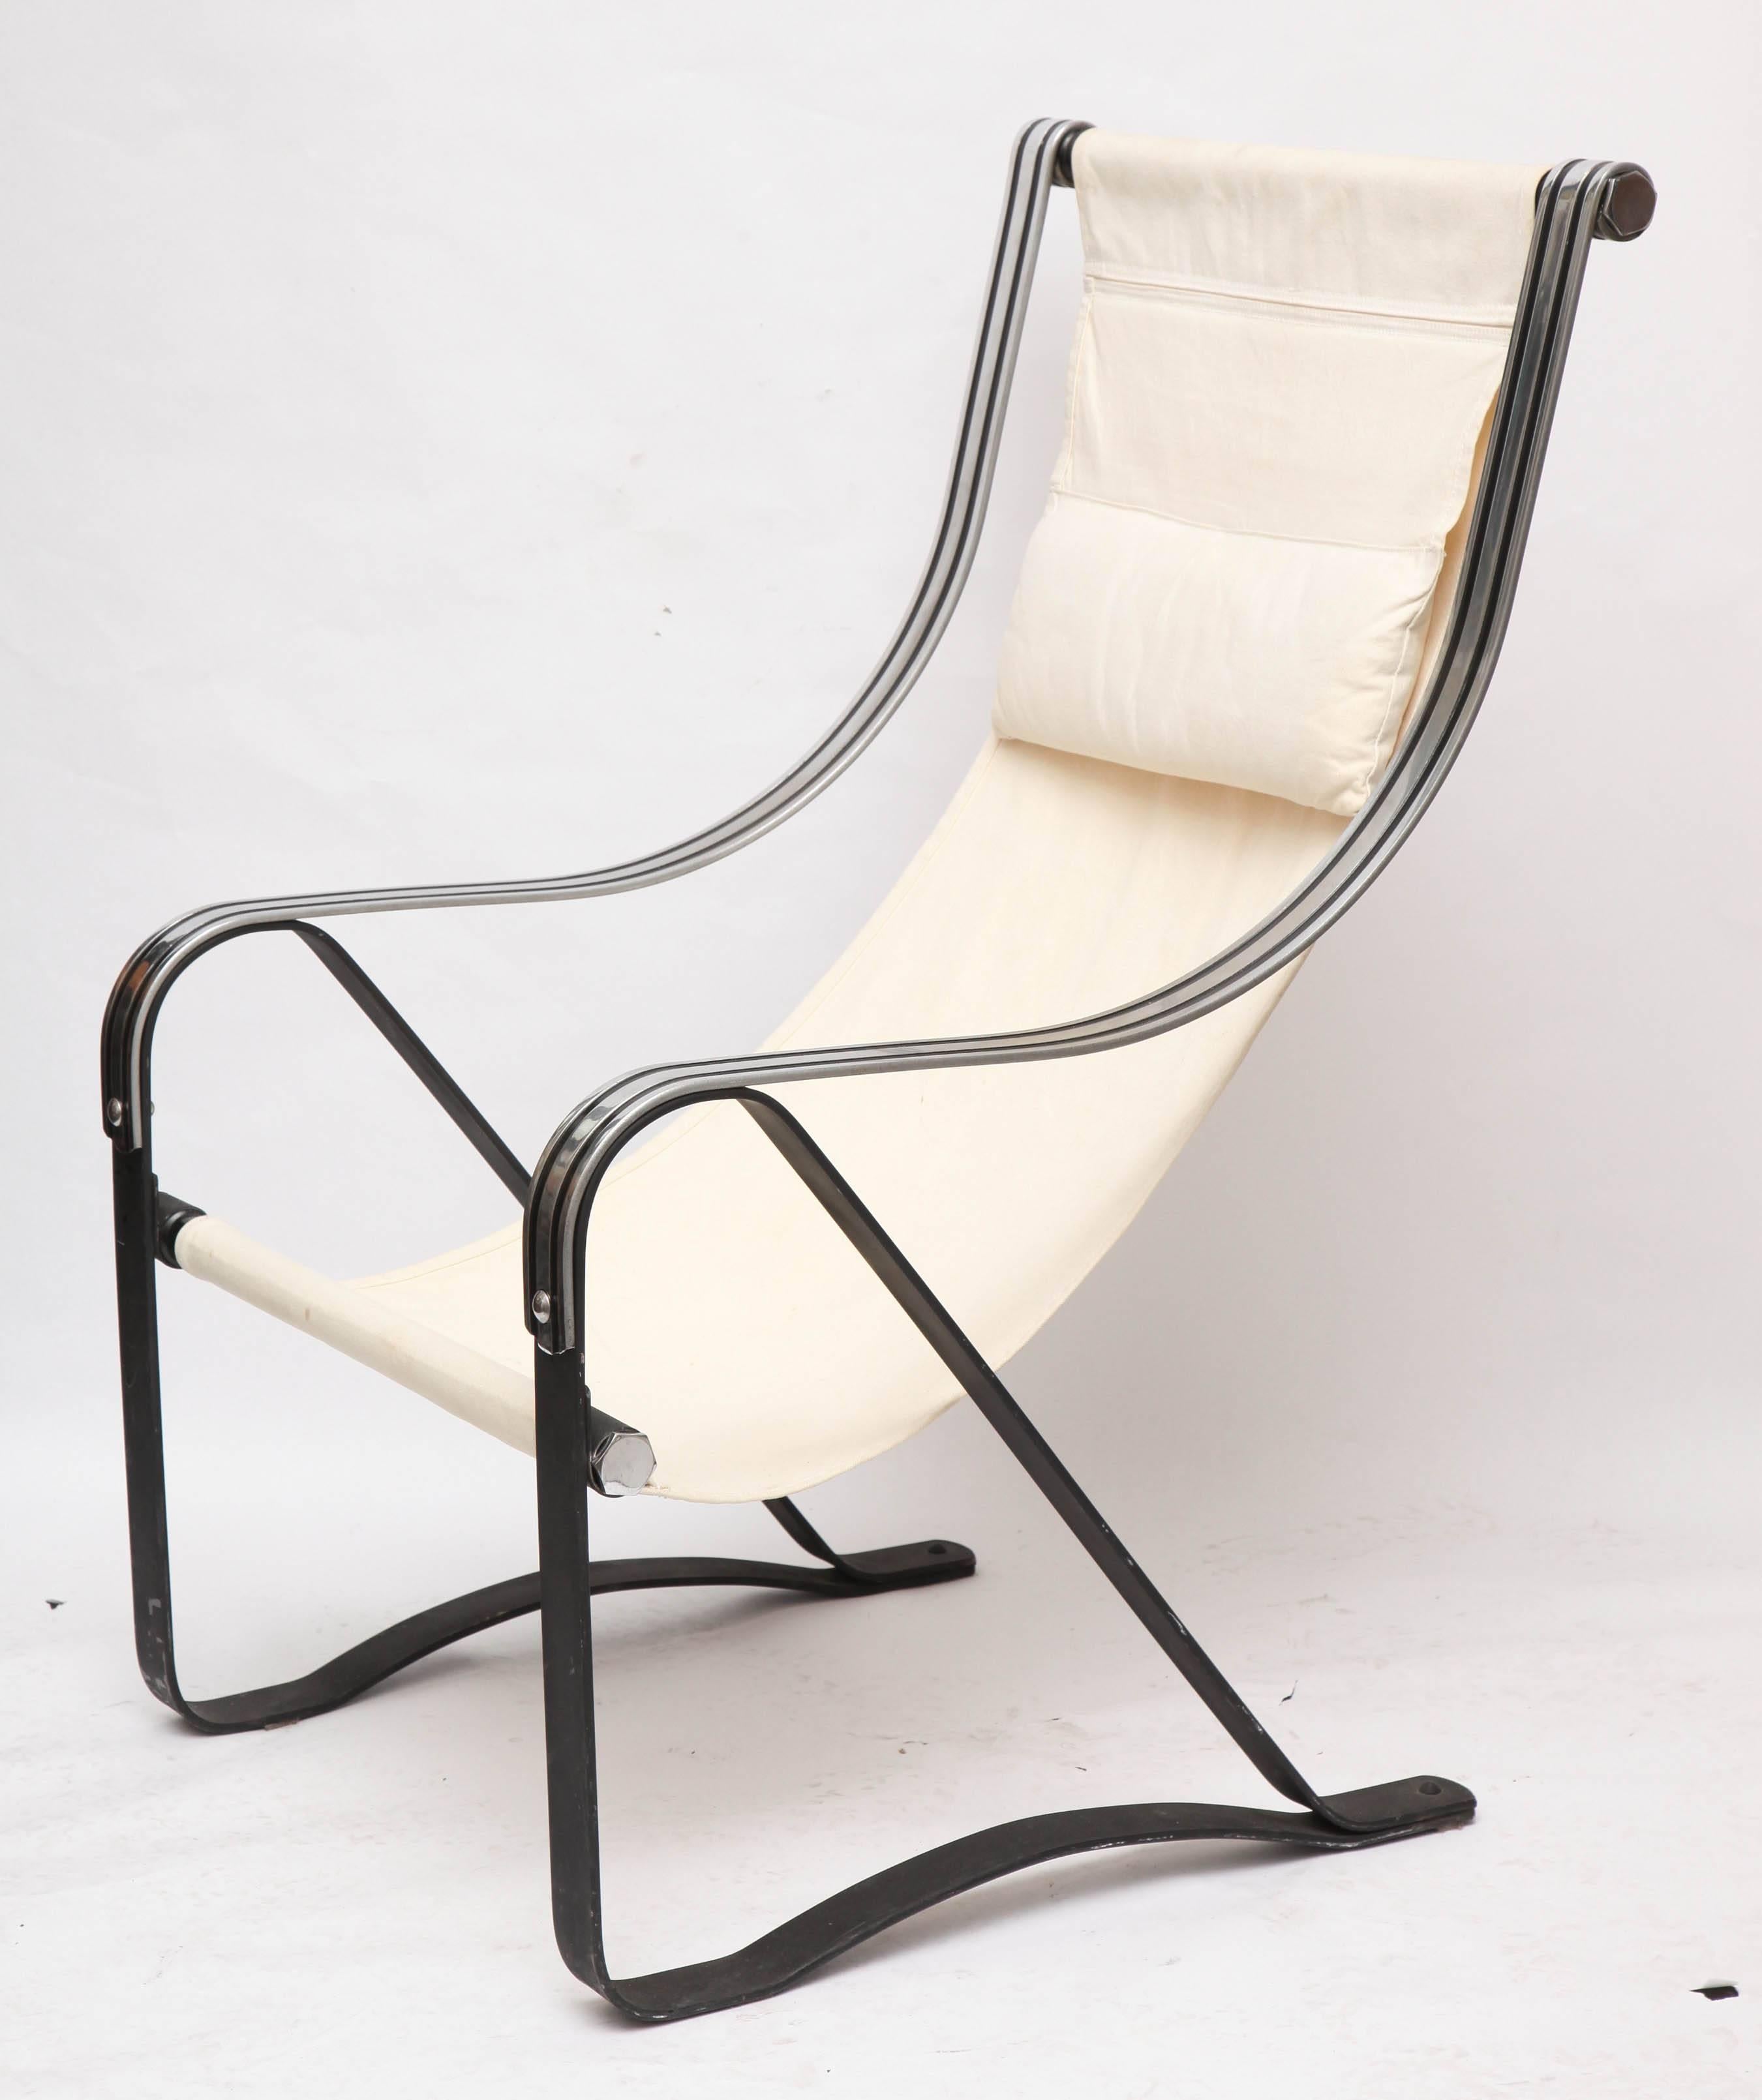 Metalwork 1930s American Modernist Chair by Mc Kay